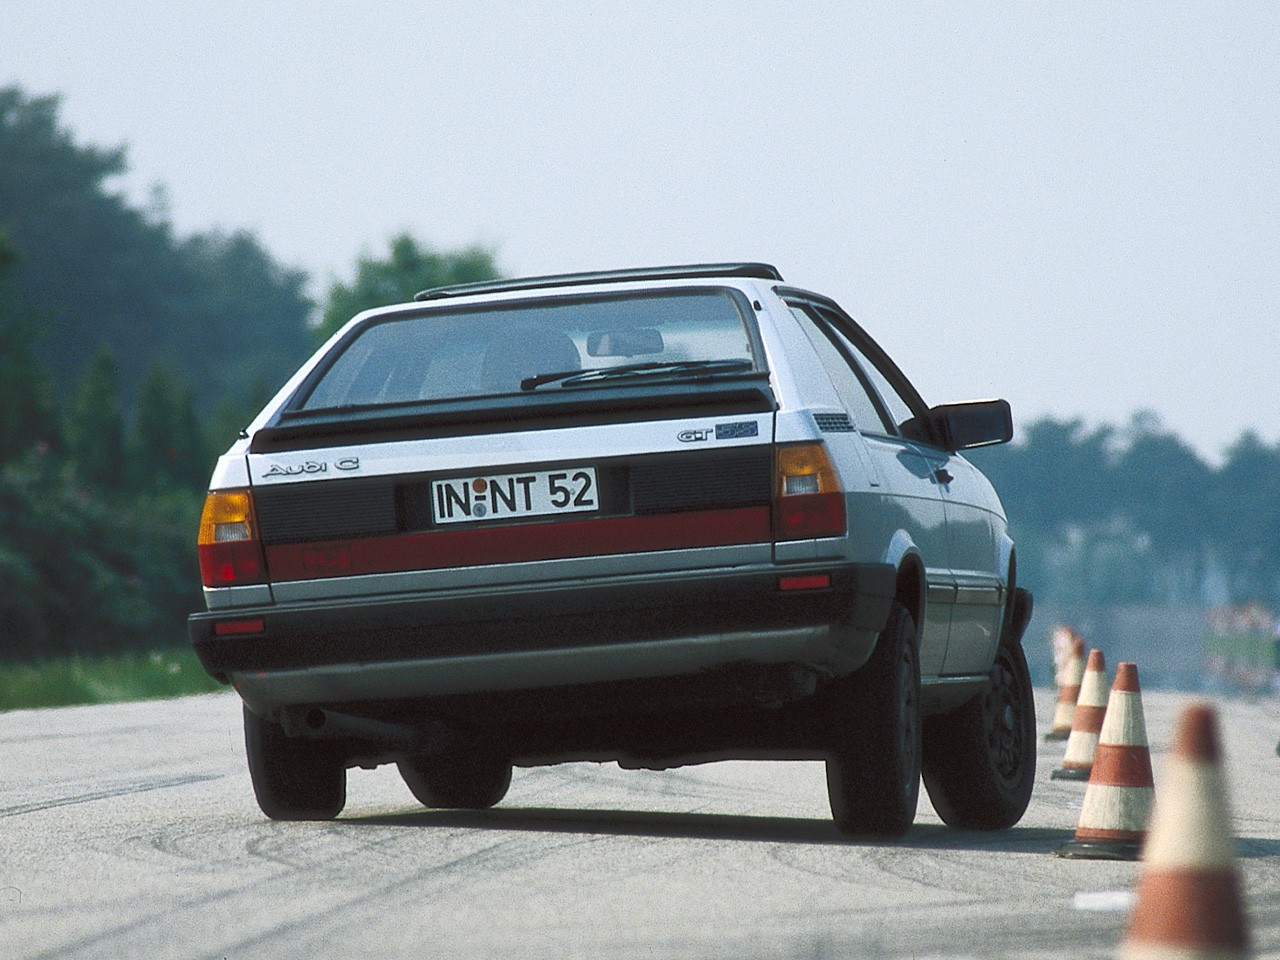 AUDI Coupe specs & photos - 1981, 1982, 1983, 1984, 1985 ...